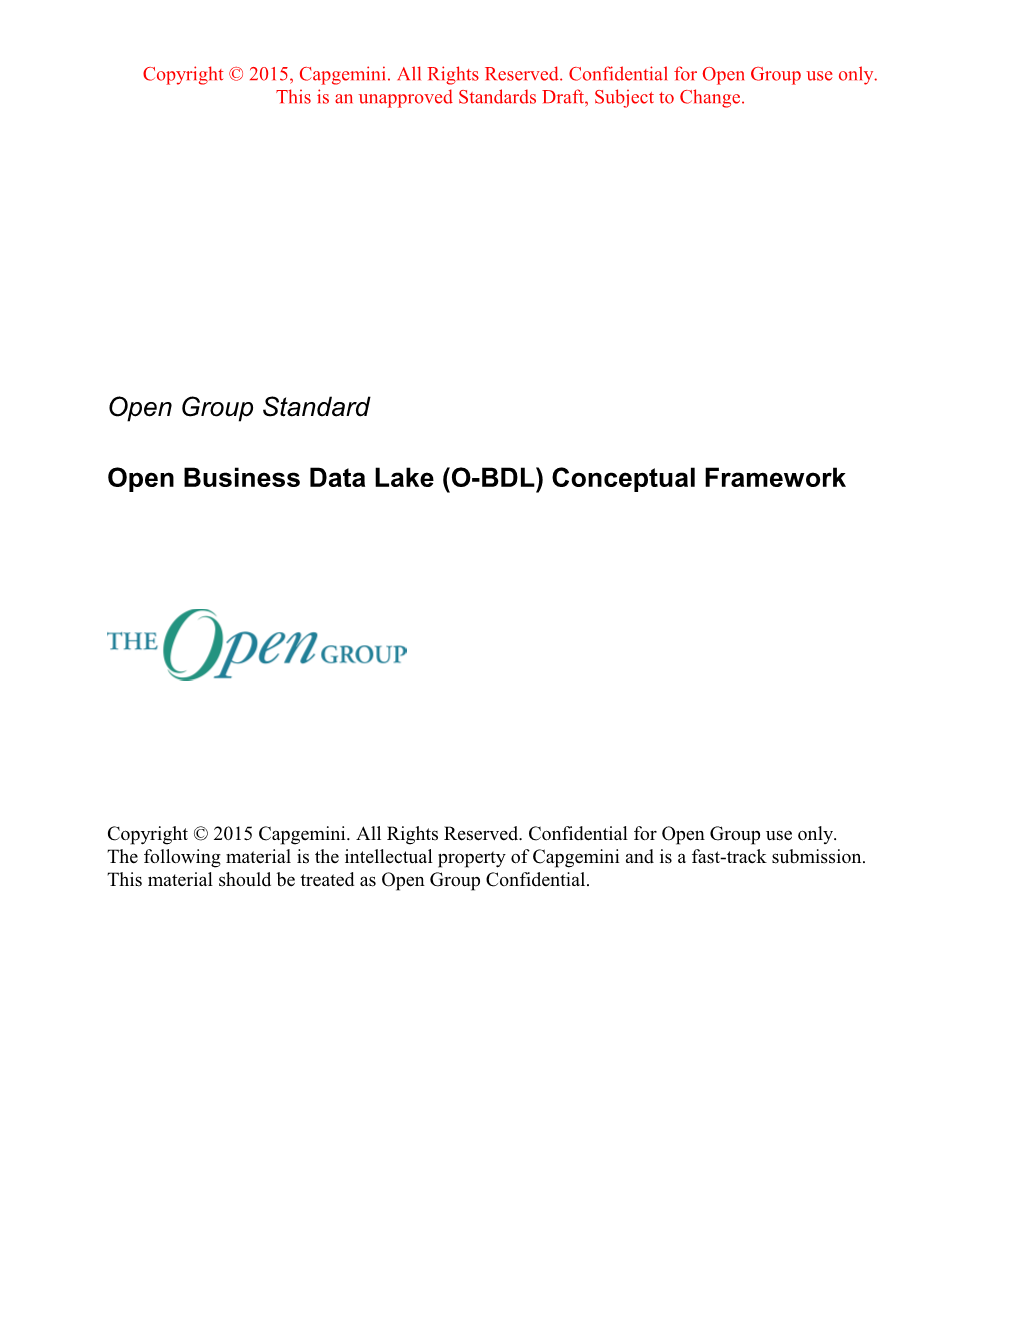 Open Business Data Lake (O-BDL)